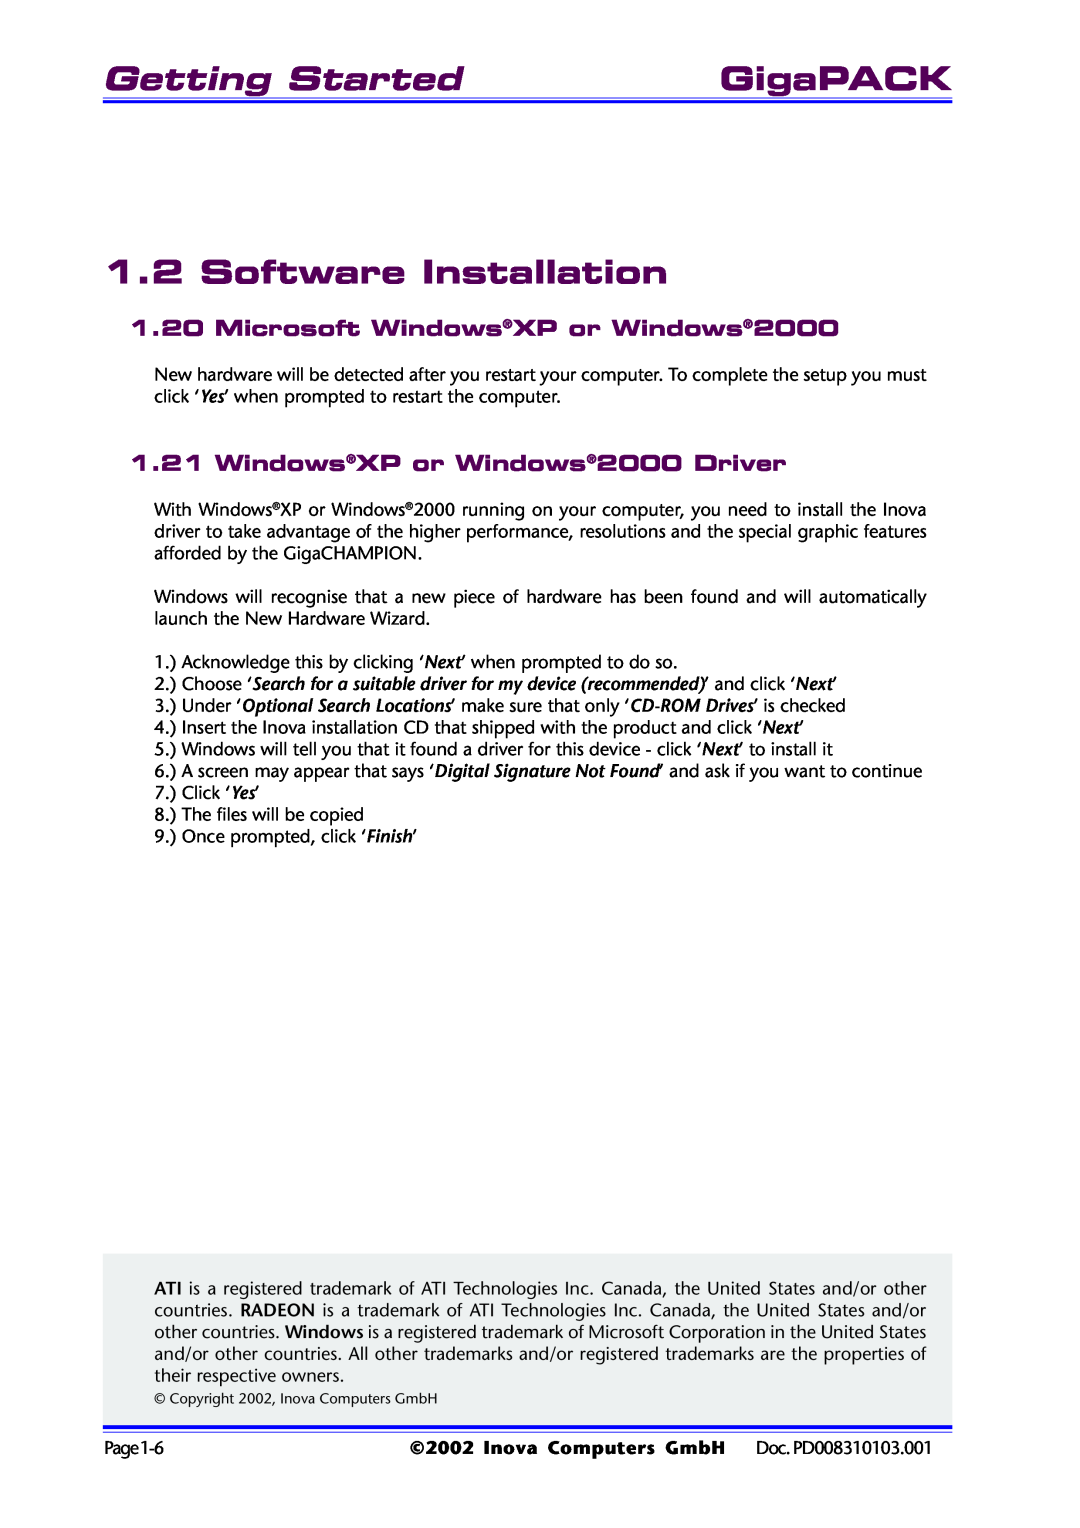 Inova PD008310103.001 AB user manual Software Installation, Getting Started, GigaPACK, Microsoft WindowsXP or Windows2000 